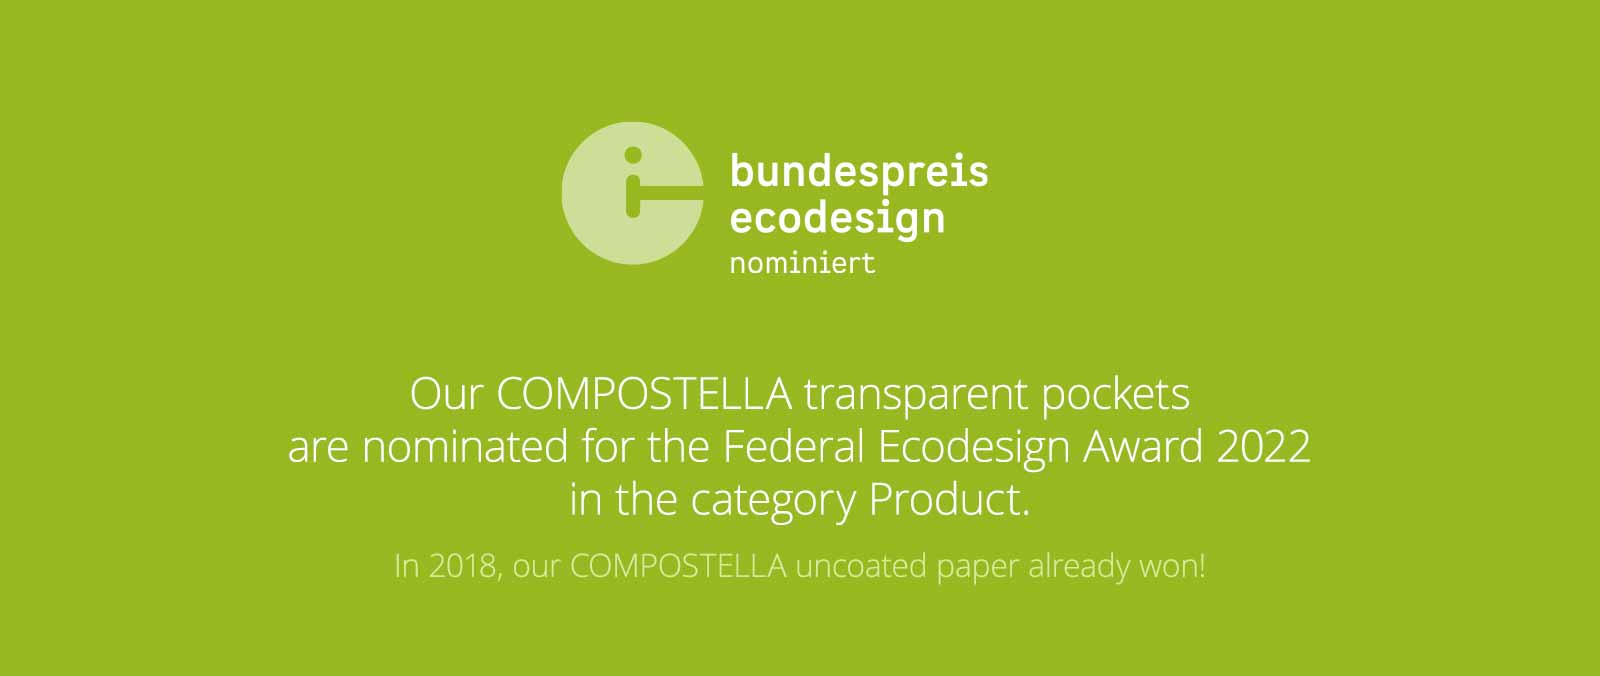 Compostella Nomination Federal Award Ecodesign 2022